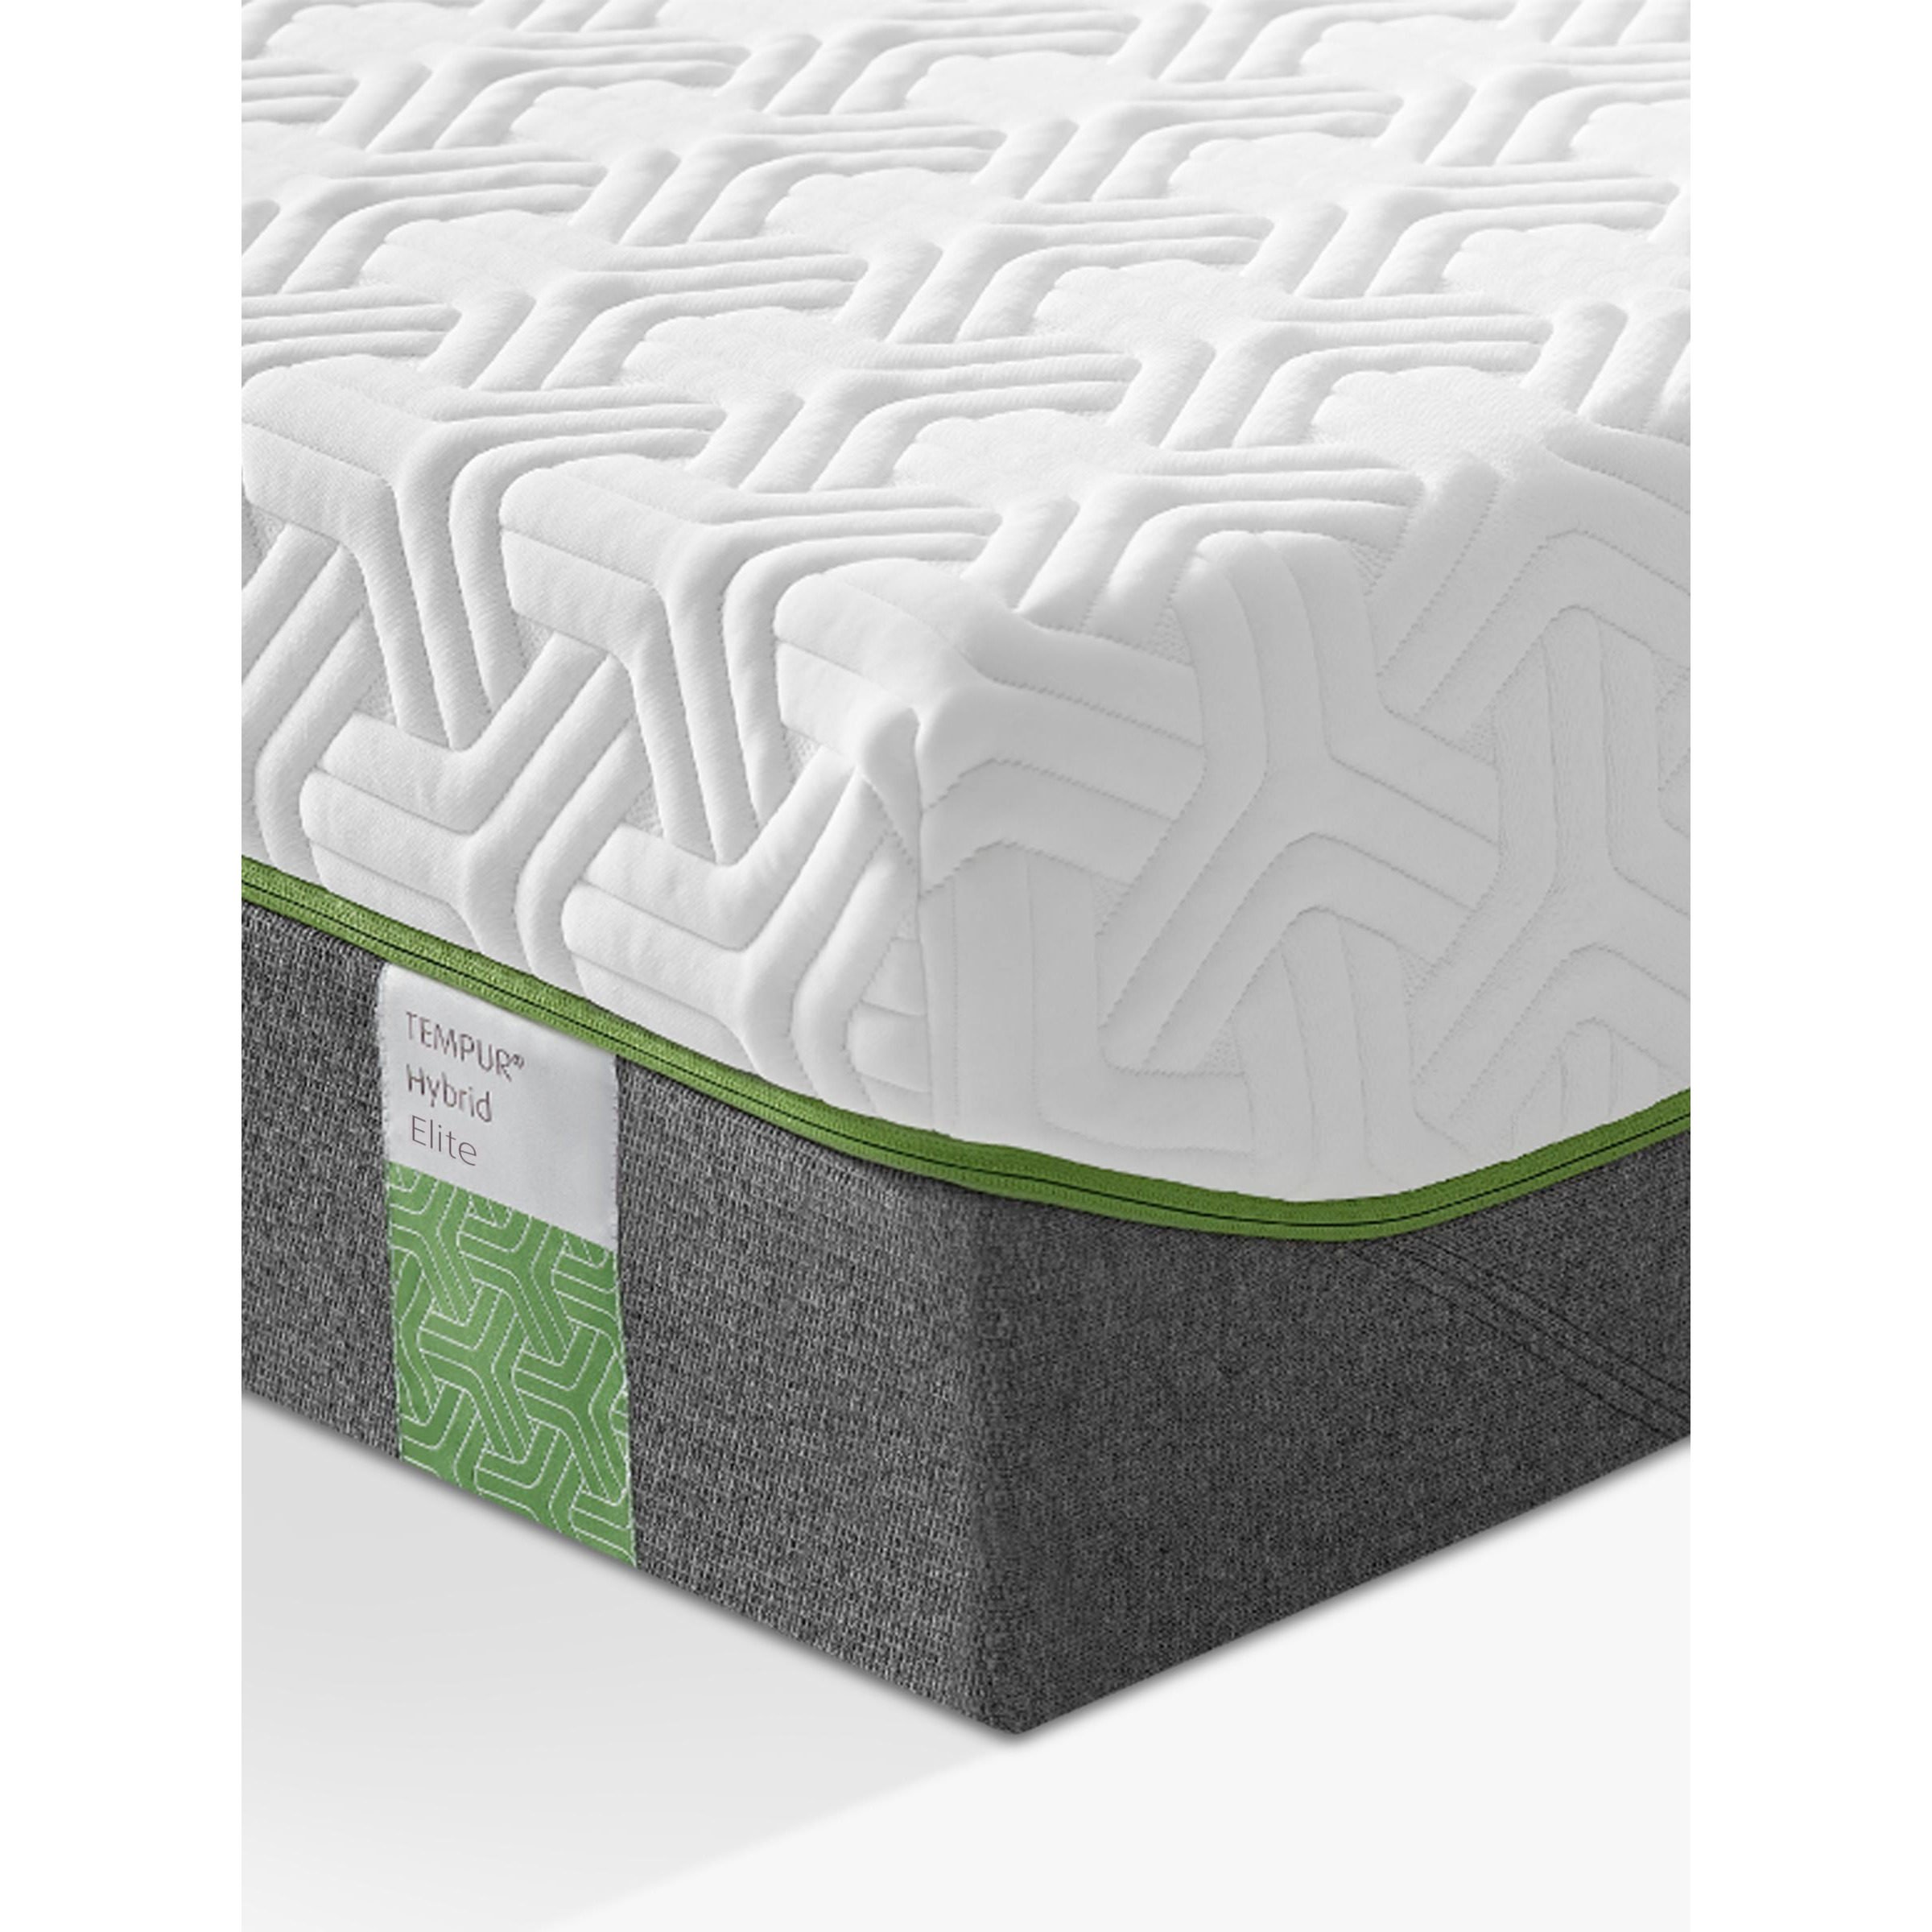 TEMPUR® Hybrid Elite Pocket Spring Memory Foam Mattress, Medium Tension, Extra Long Single - image 1